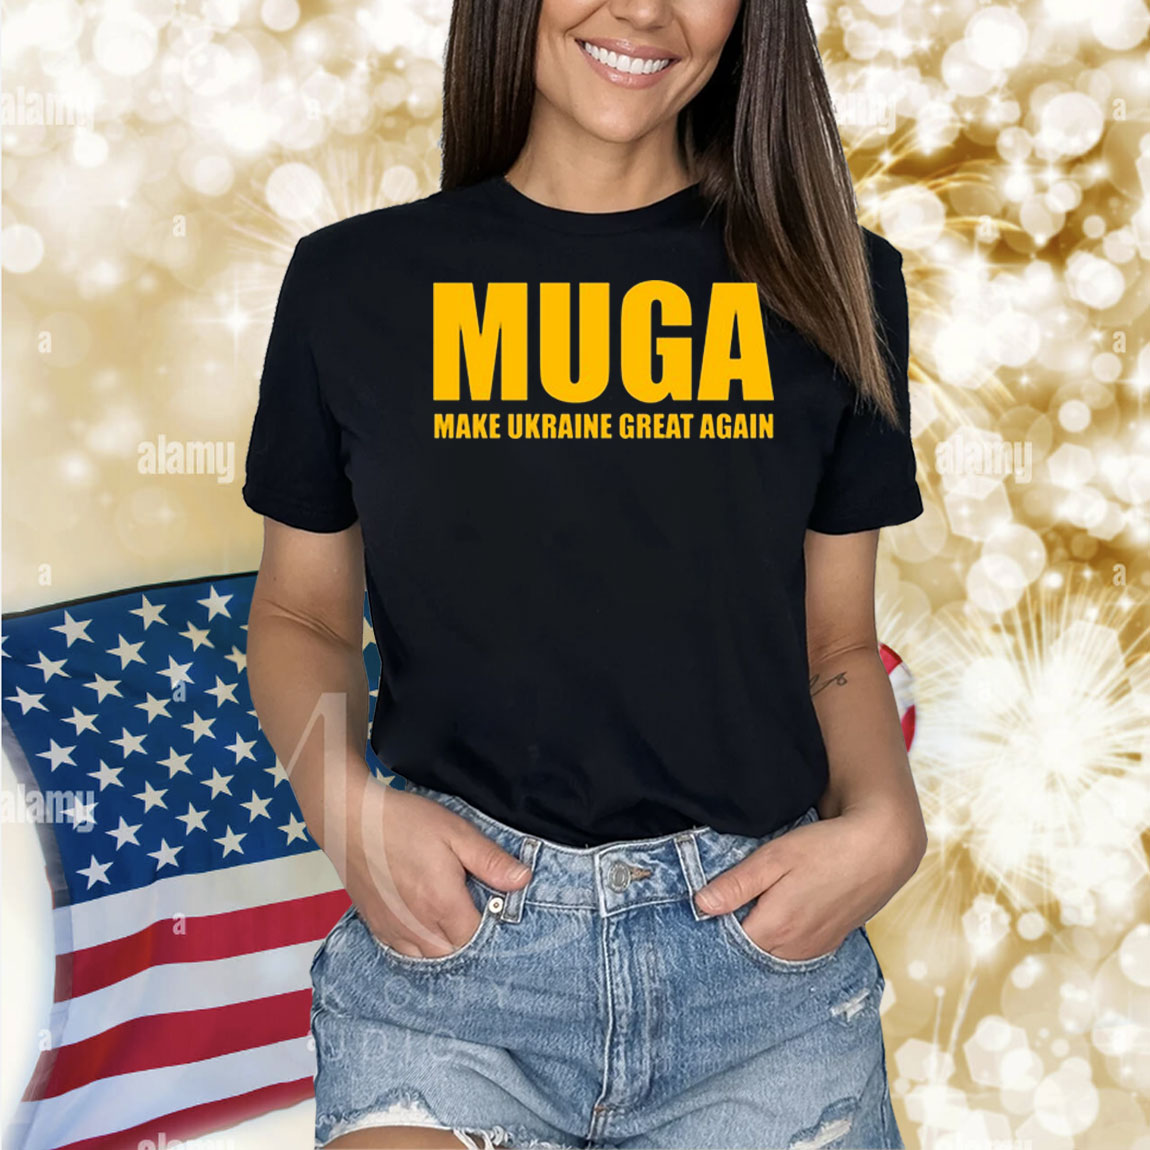 North Atlantic Fella Organization Muga (Make Ukraine Great Again) Shirts